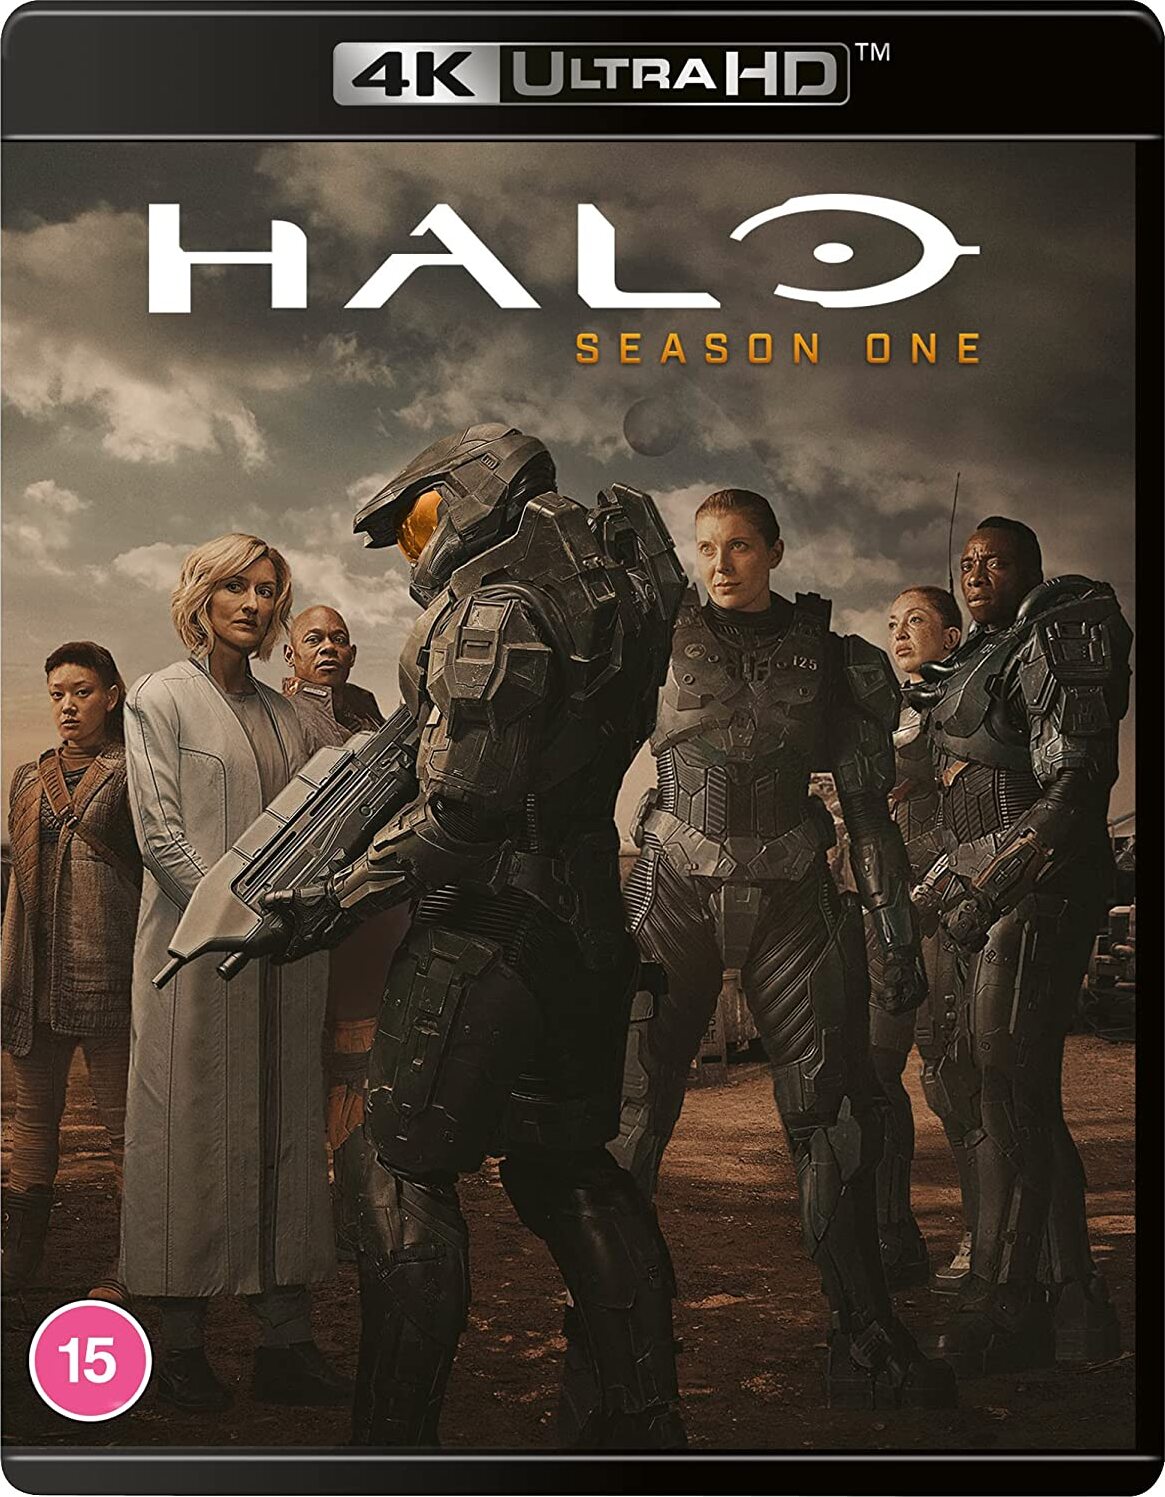 Watch Halo Season 1 Episode 2: Unbound - Full show on Paramount Plus